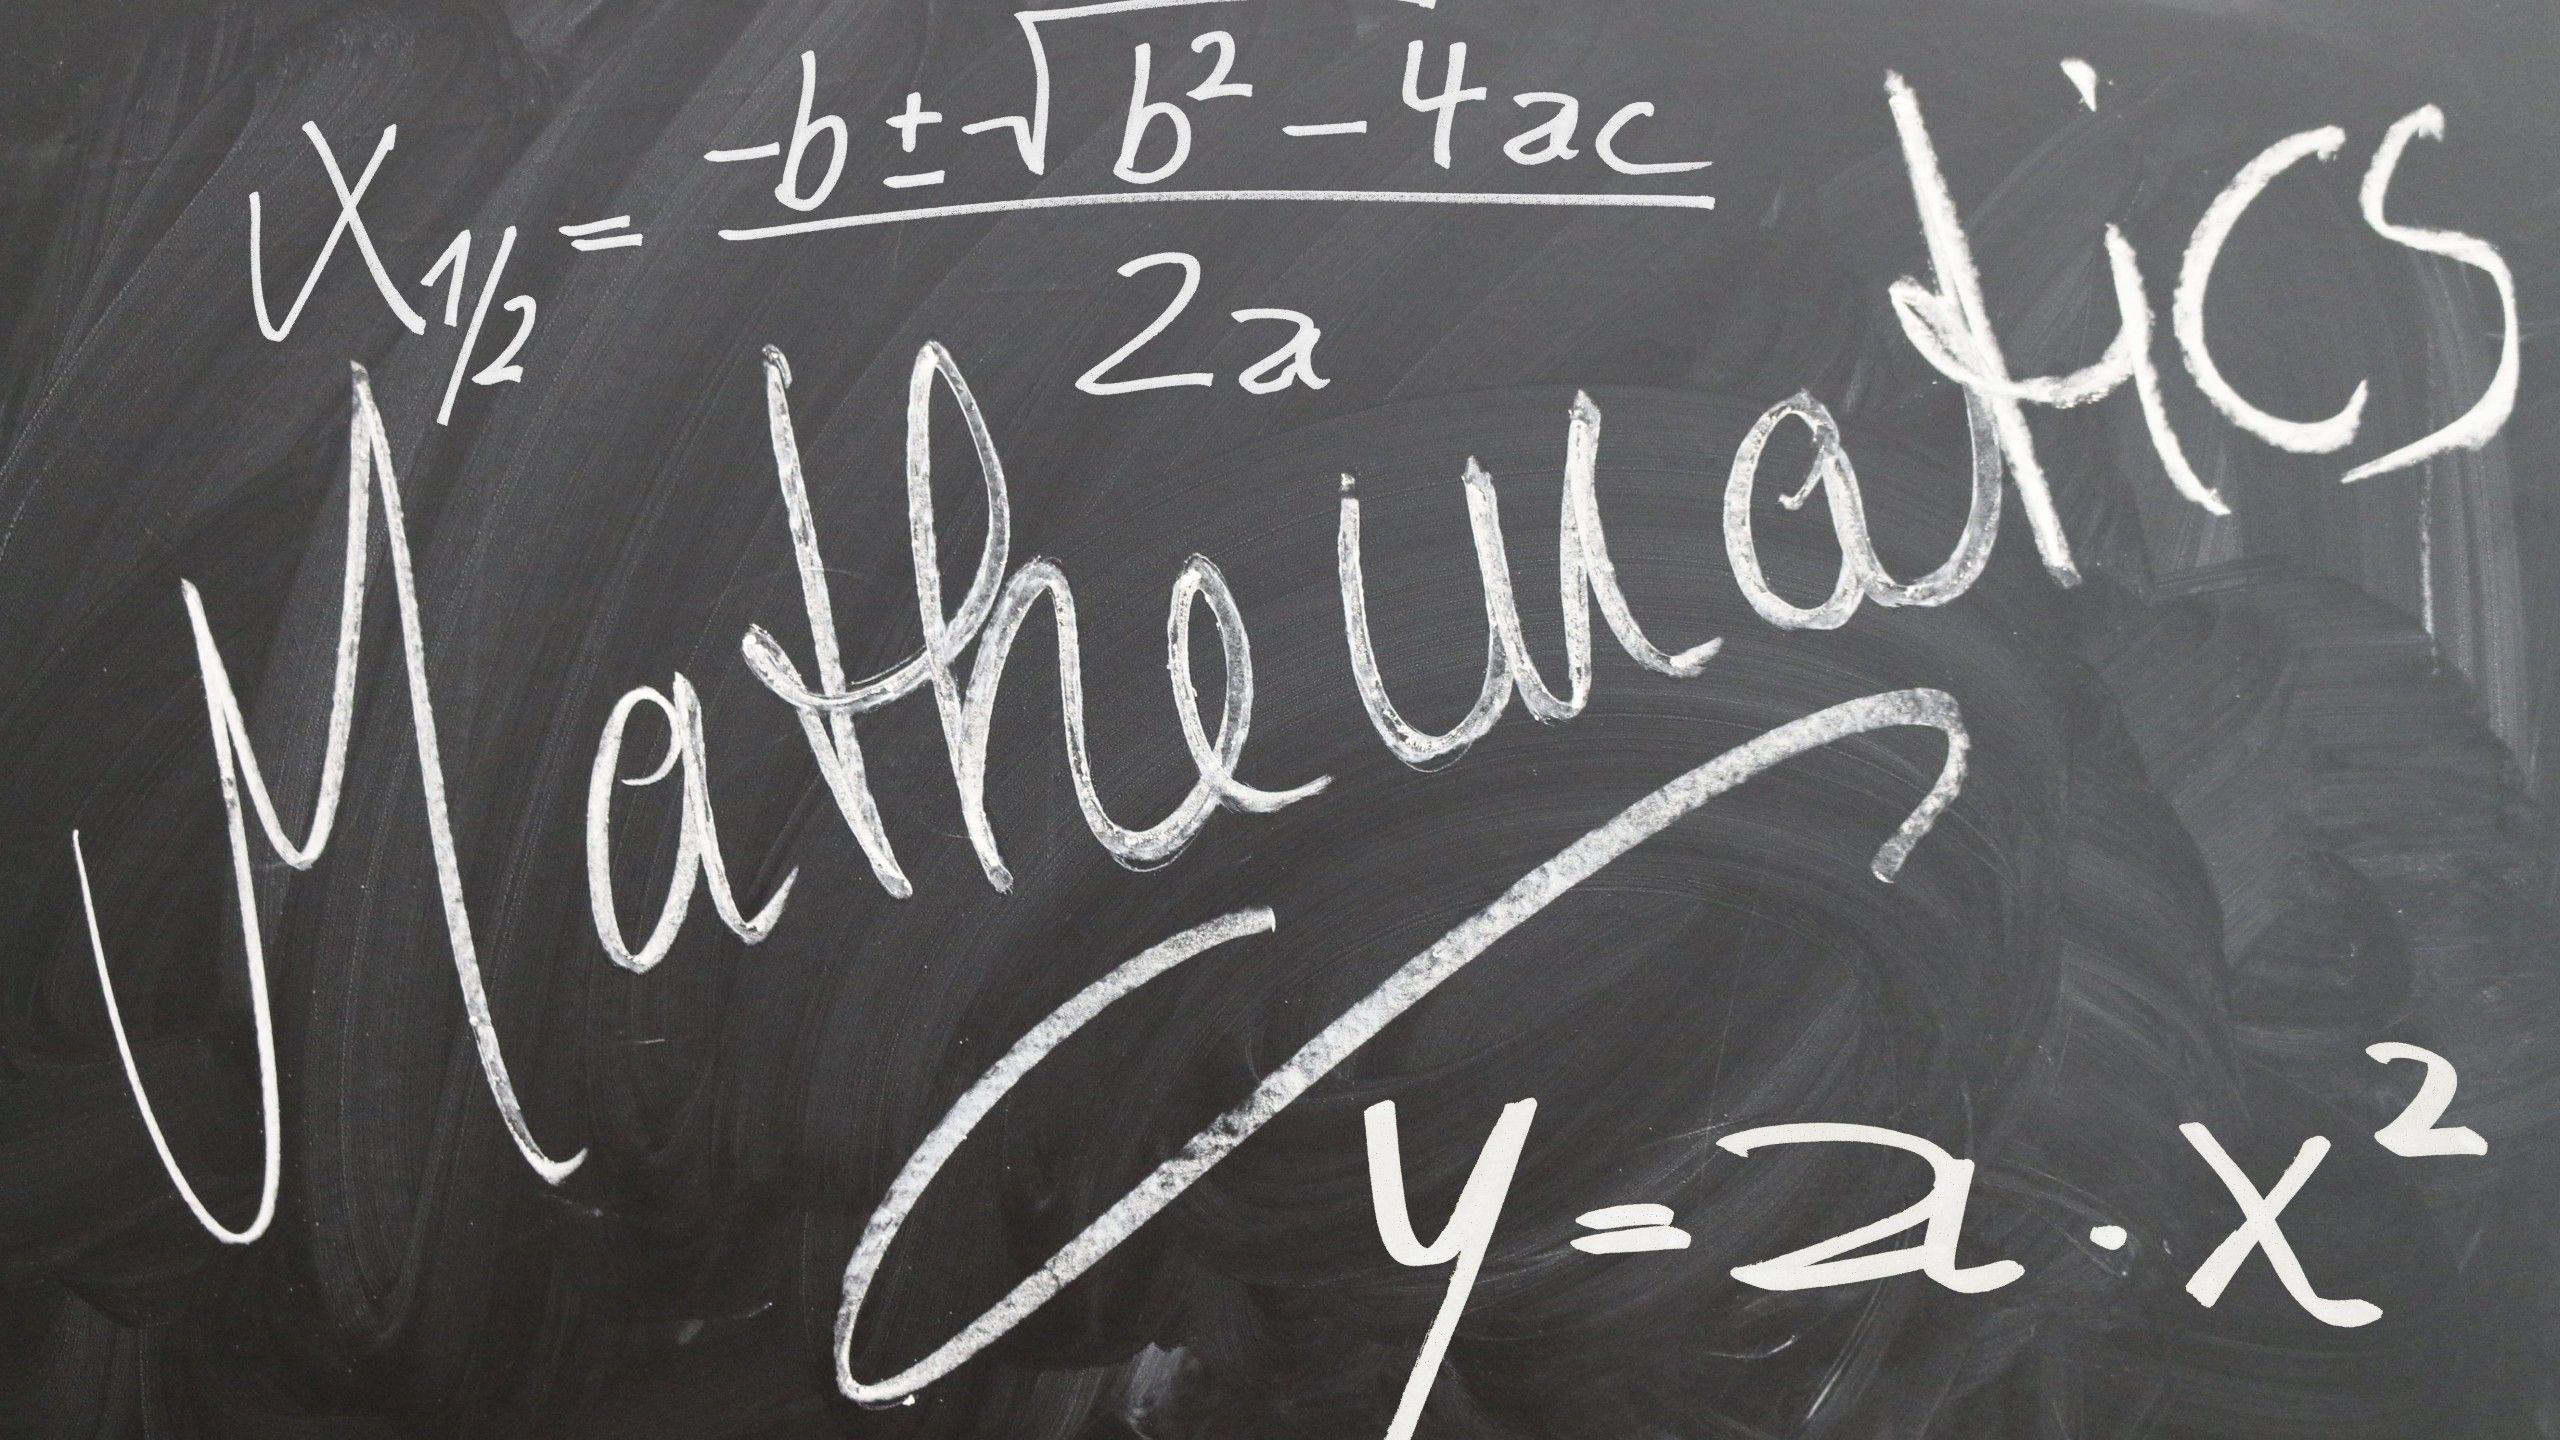 Chalkboard Math Wallpapers Top Free Chalkboard Math Backgrounds